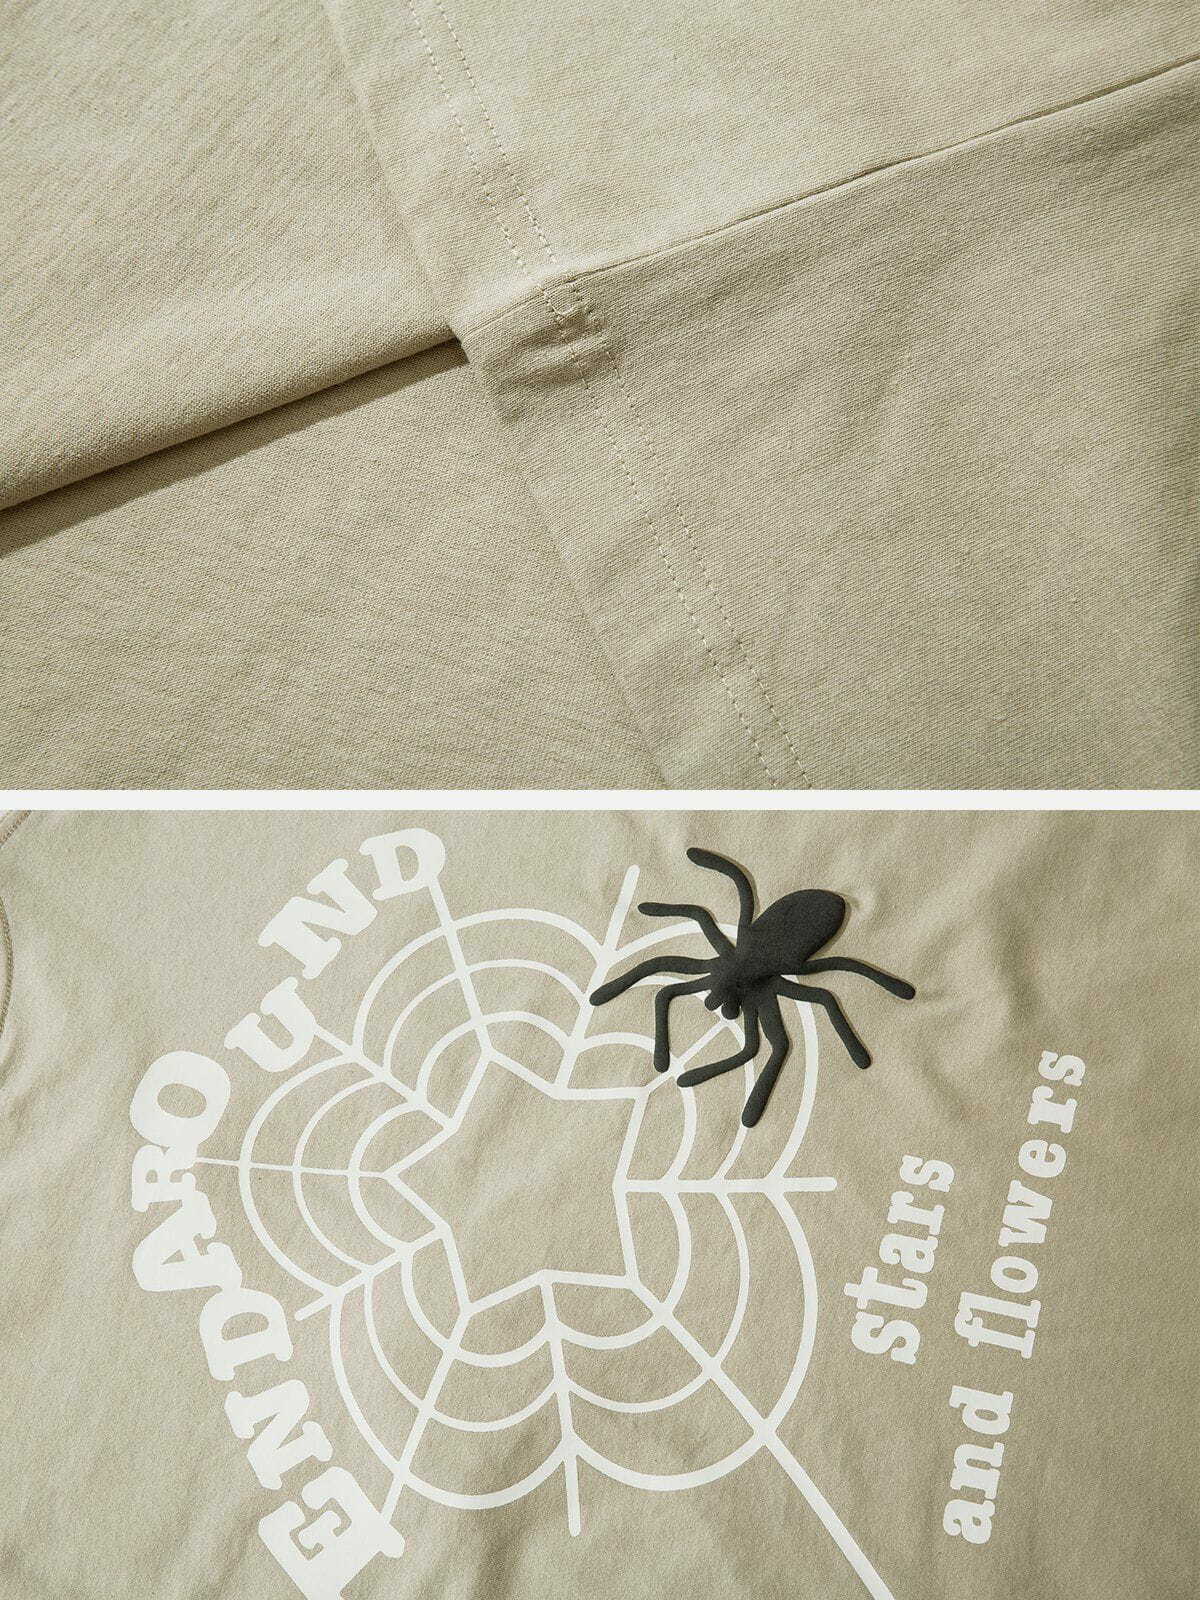 retro spider print tee edgy urban streetwear essential 2981